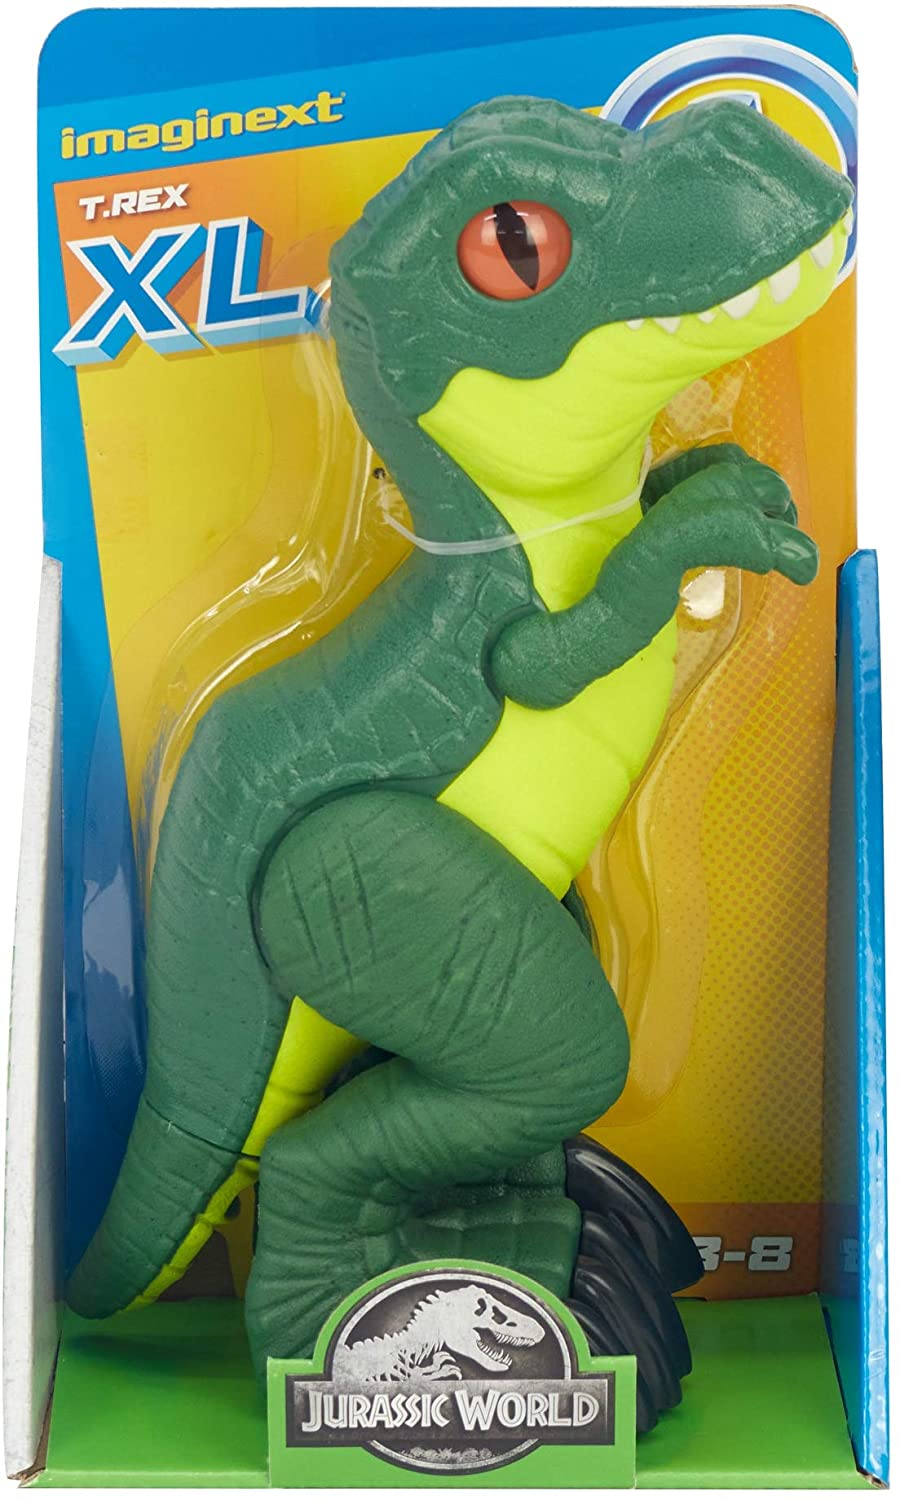 MATTEL - Fisher-Price Imaginext Jurassic World T Rex Xl